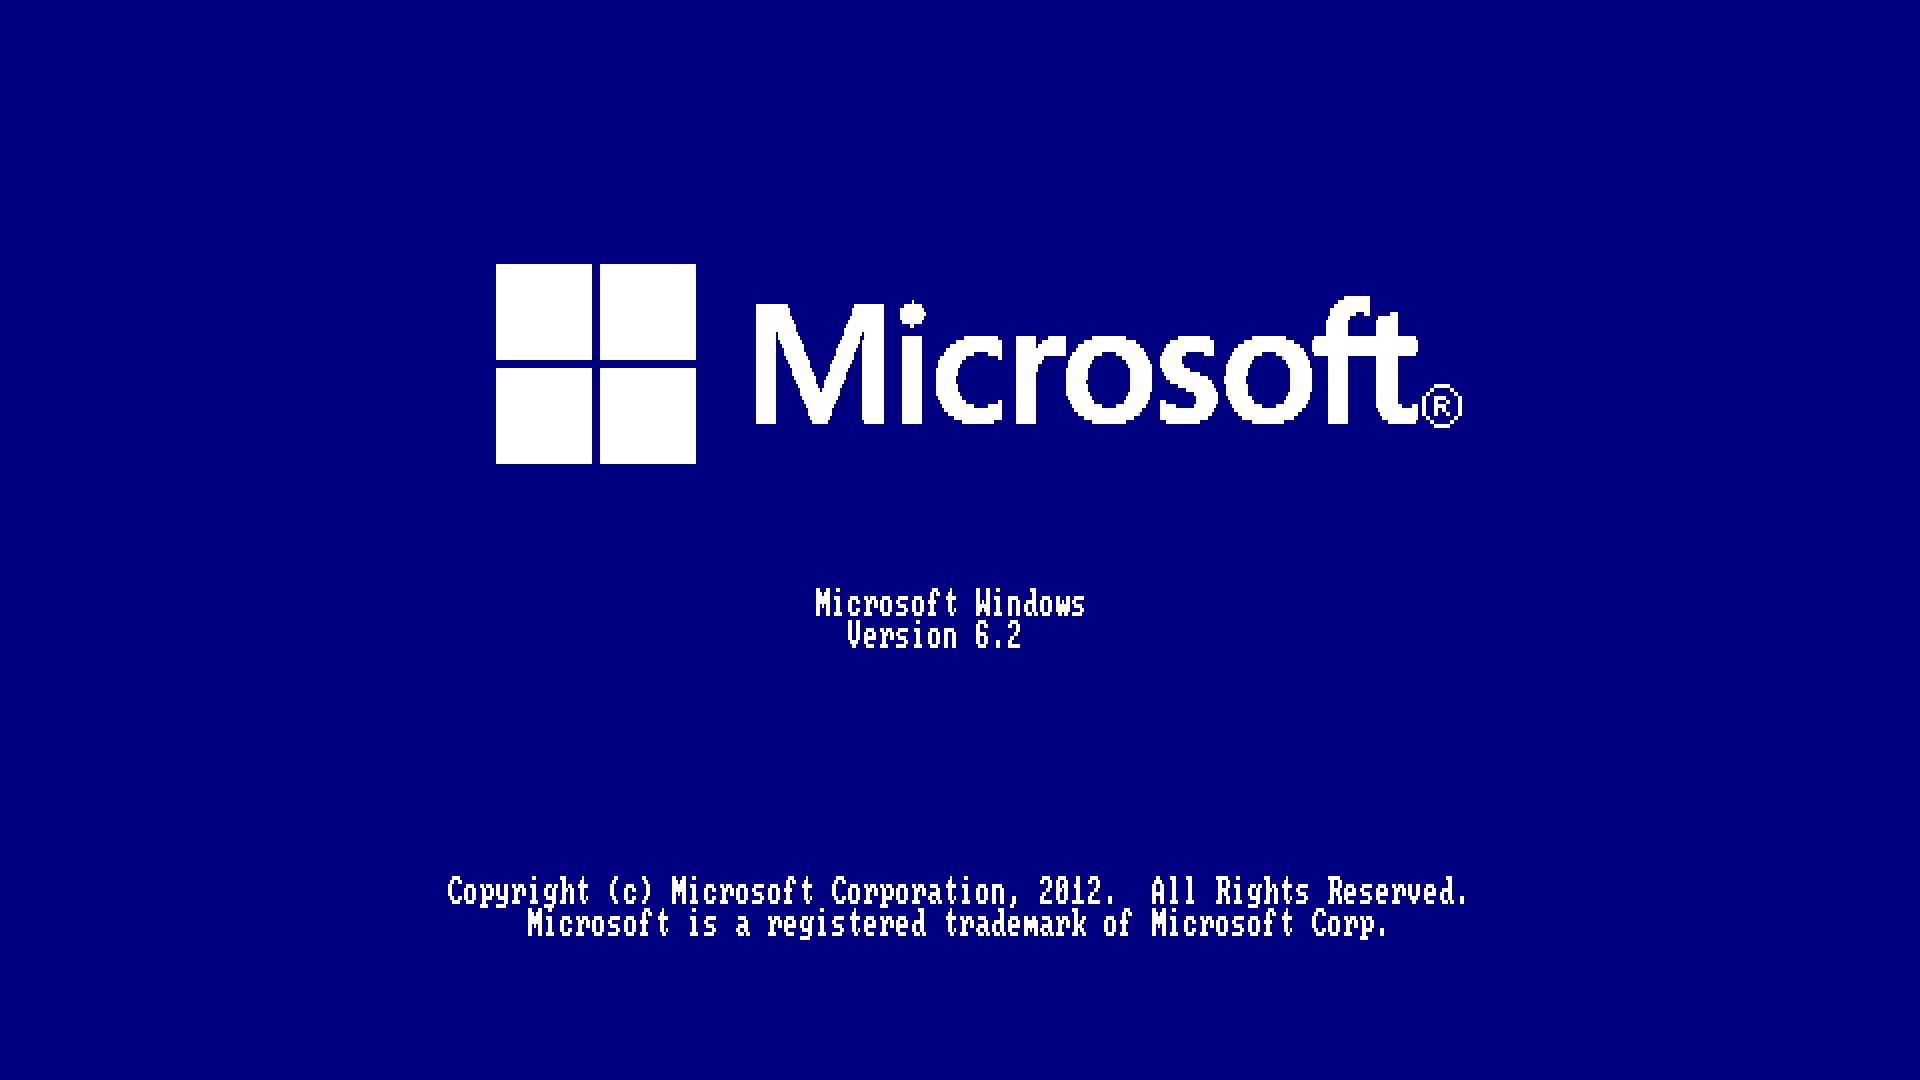 100+] Windows 95 Wallpapers | Wallpapers.com